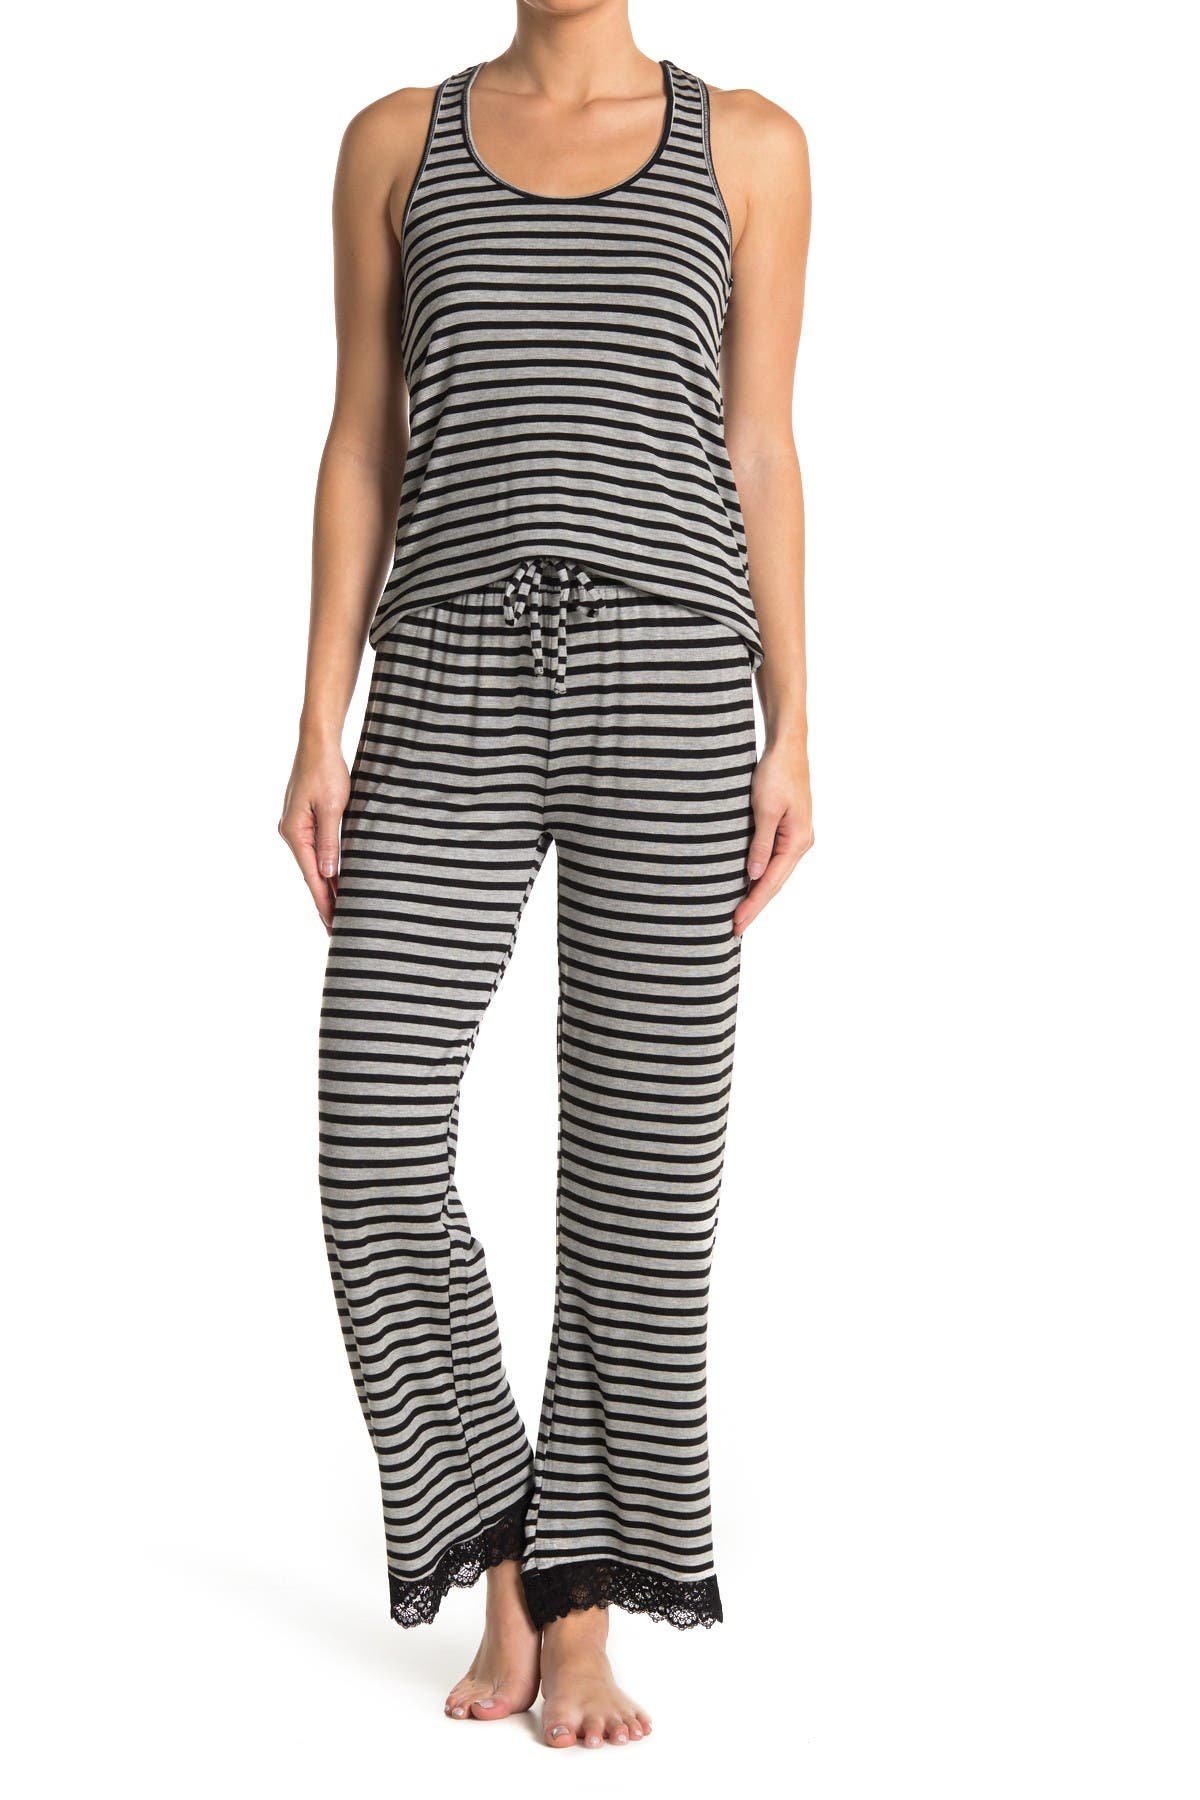 VOOMALL Womens Short Sleeve Pajama Sets Print Tops with Capri Pants Pjs Set Cute Sleepwear